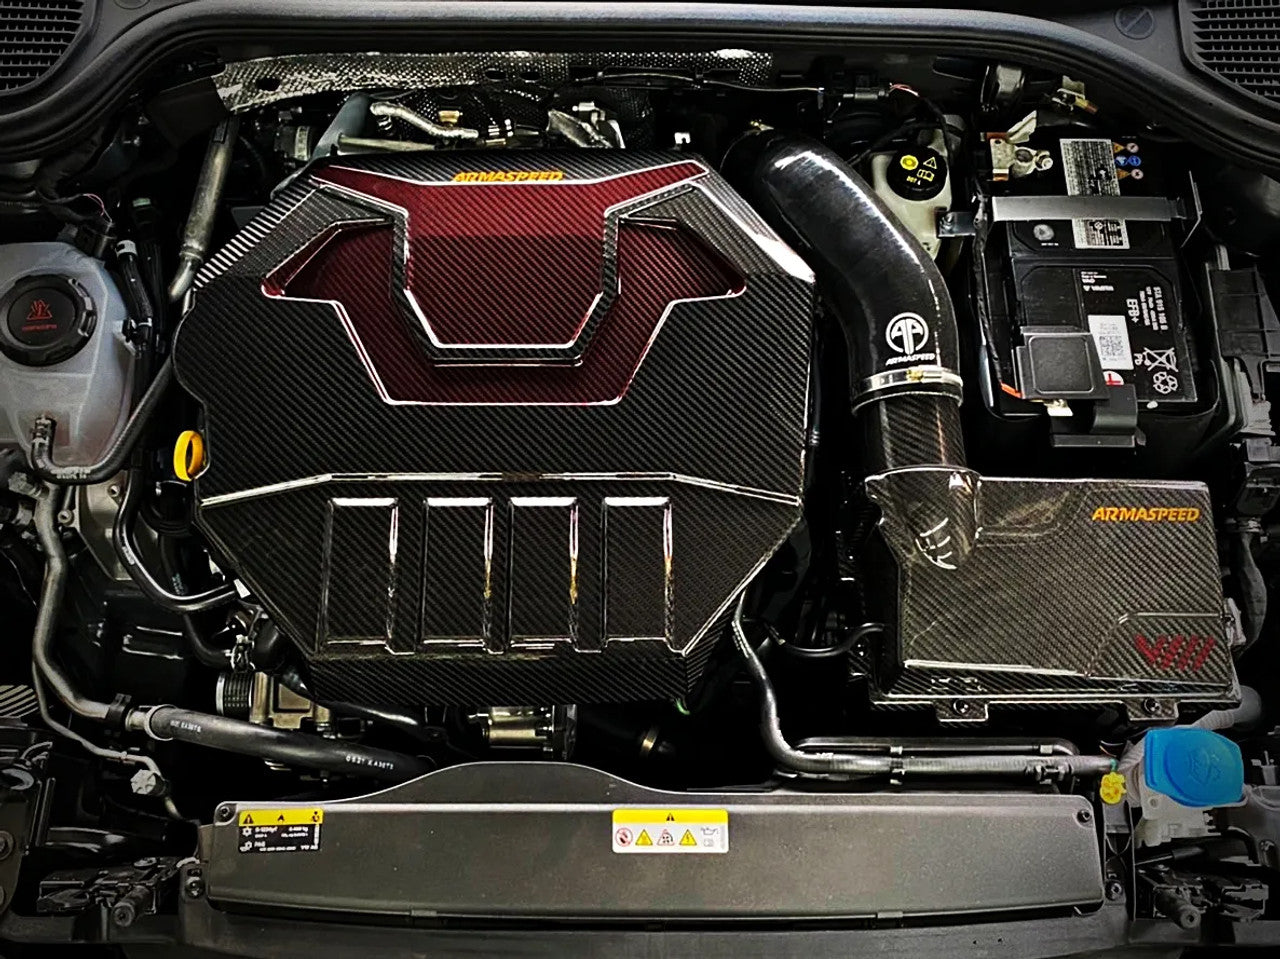 Armaspeed 1CCVW08F04-R Volkswagen Golf 8 GTI Carbon Fiber Engine Cover - Red